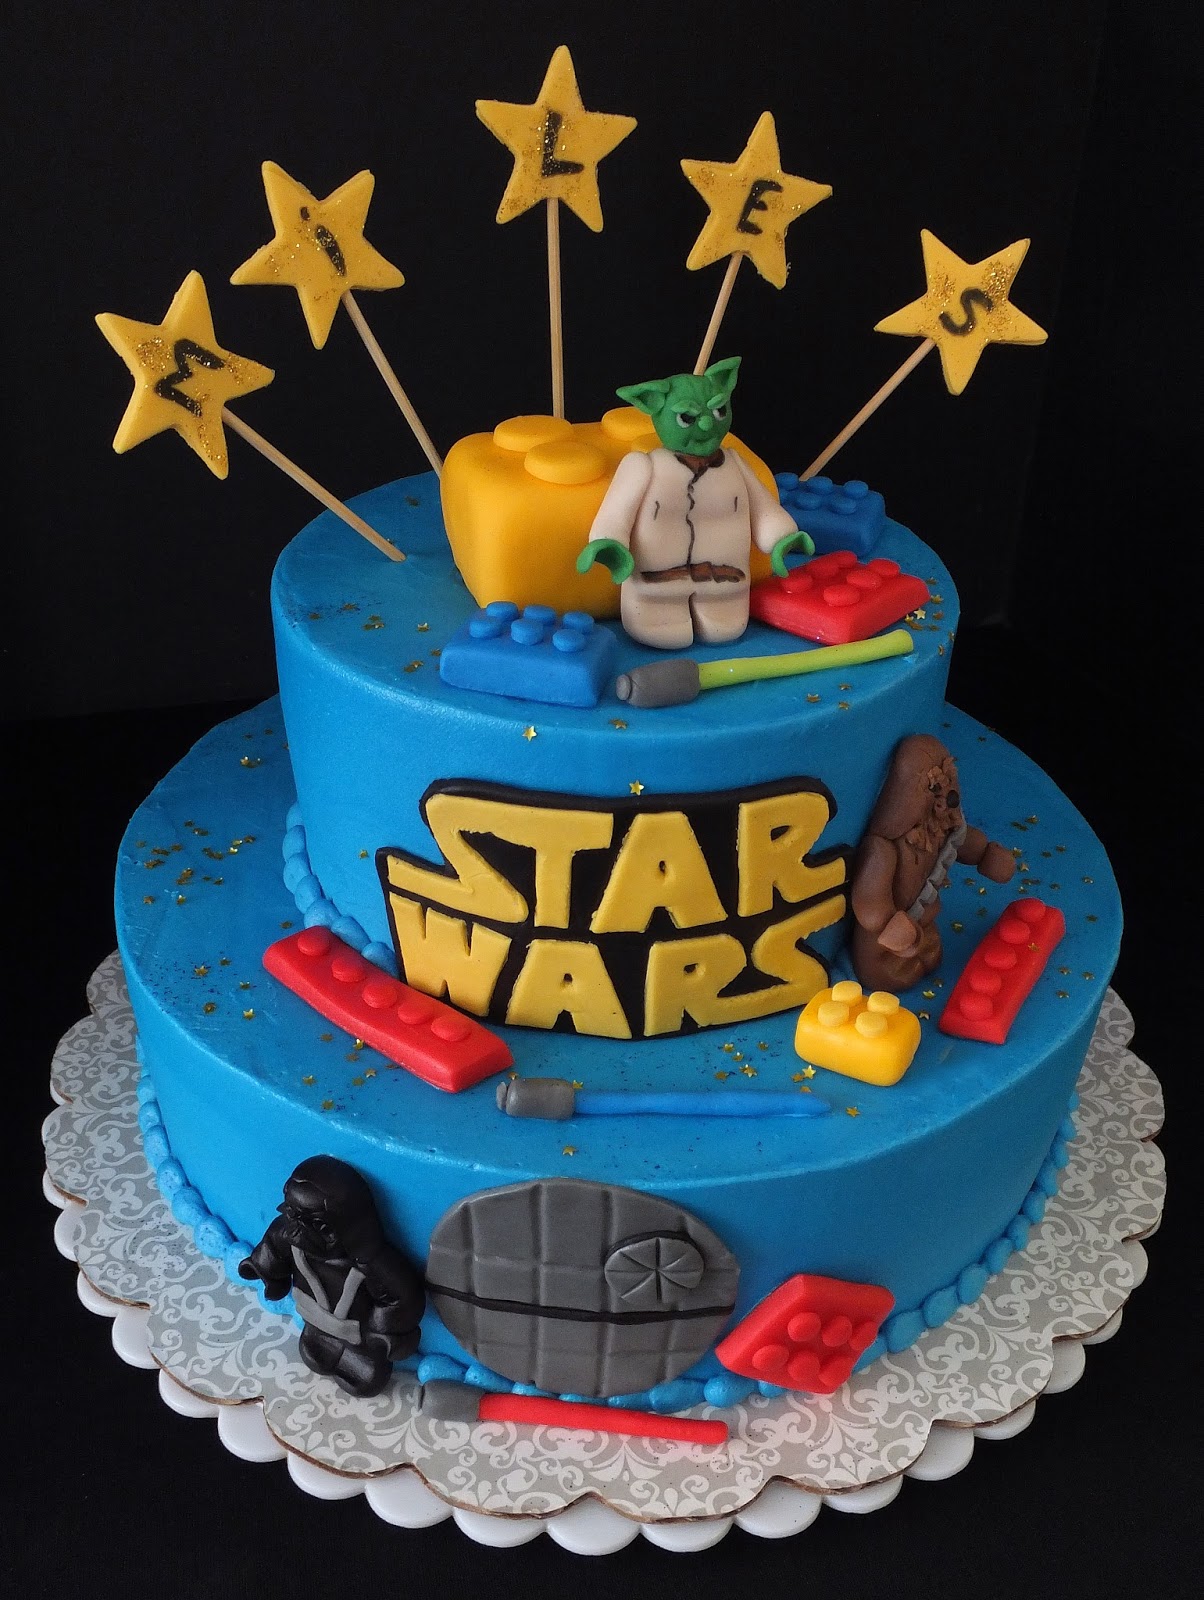 star wars wedding cake  Lego! Star Wars Lego, and edible fondant lego Mmmm! Double fun